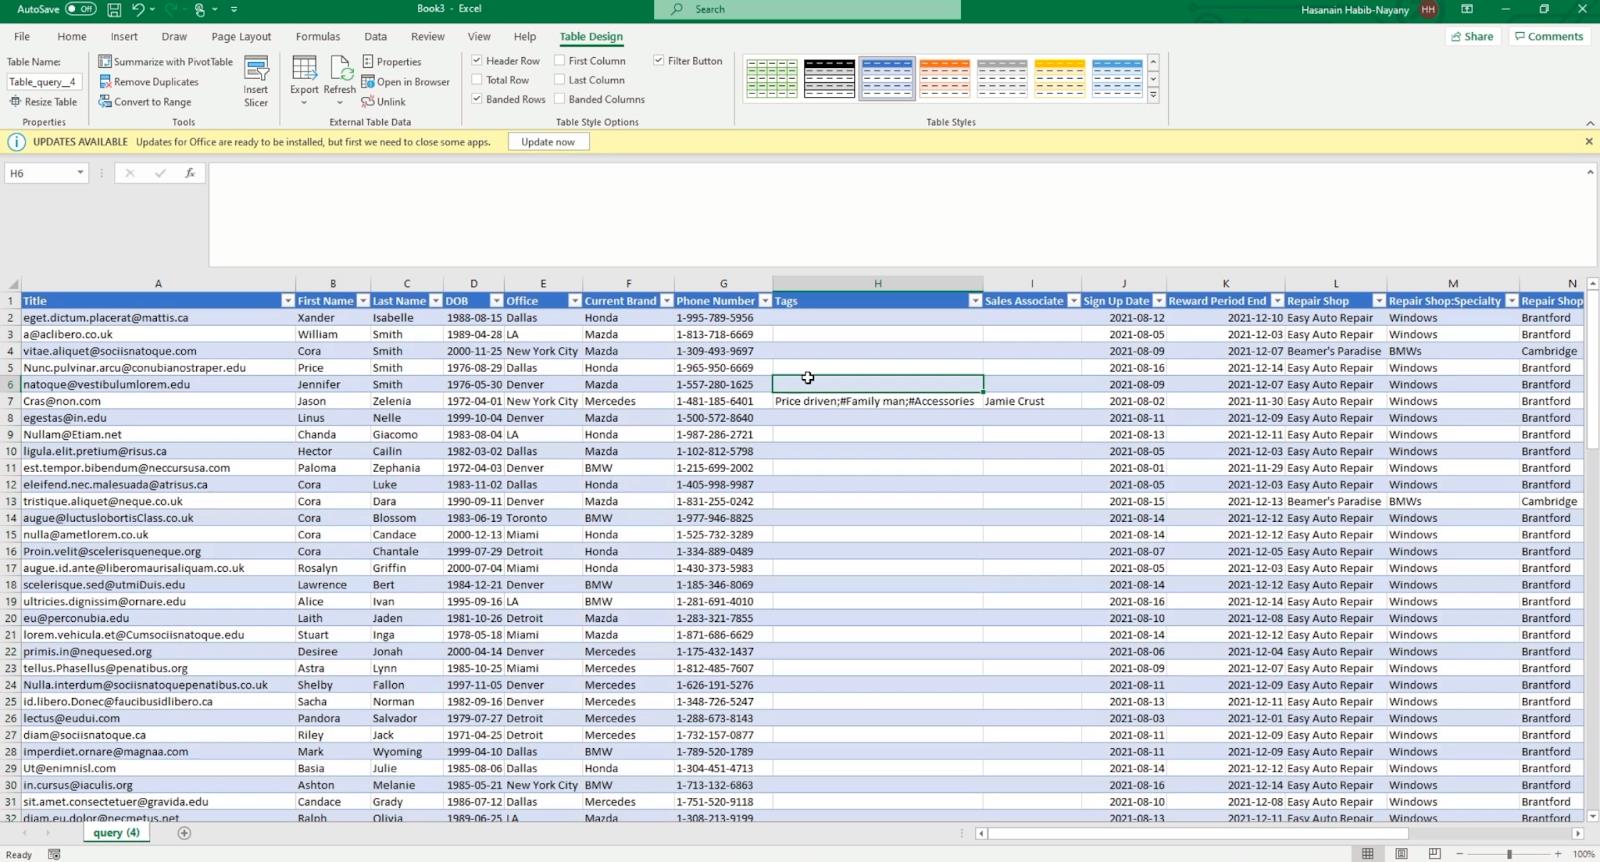 Exportar listas de SharePoint a archivos Excel o CSV